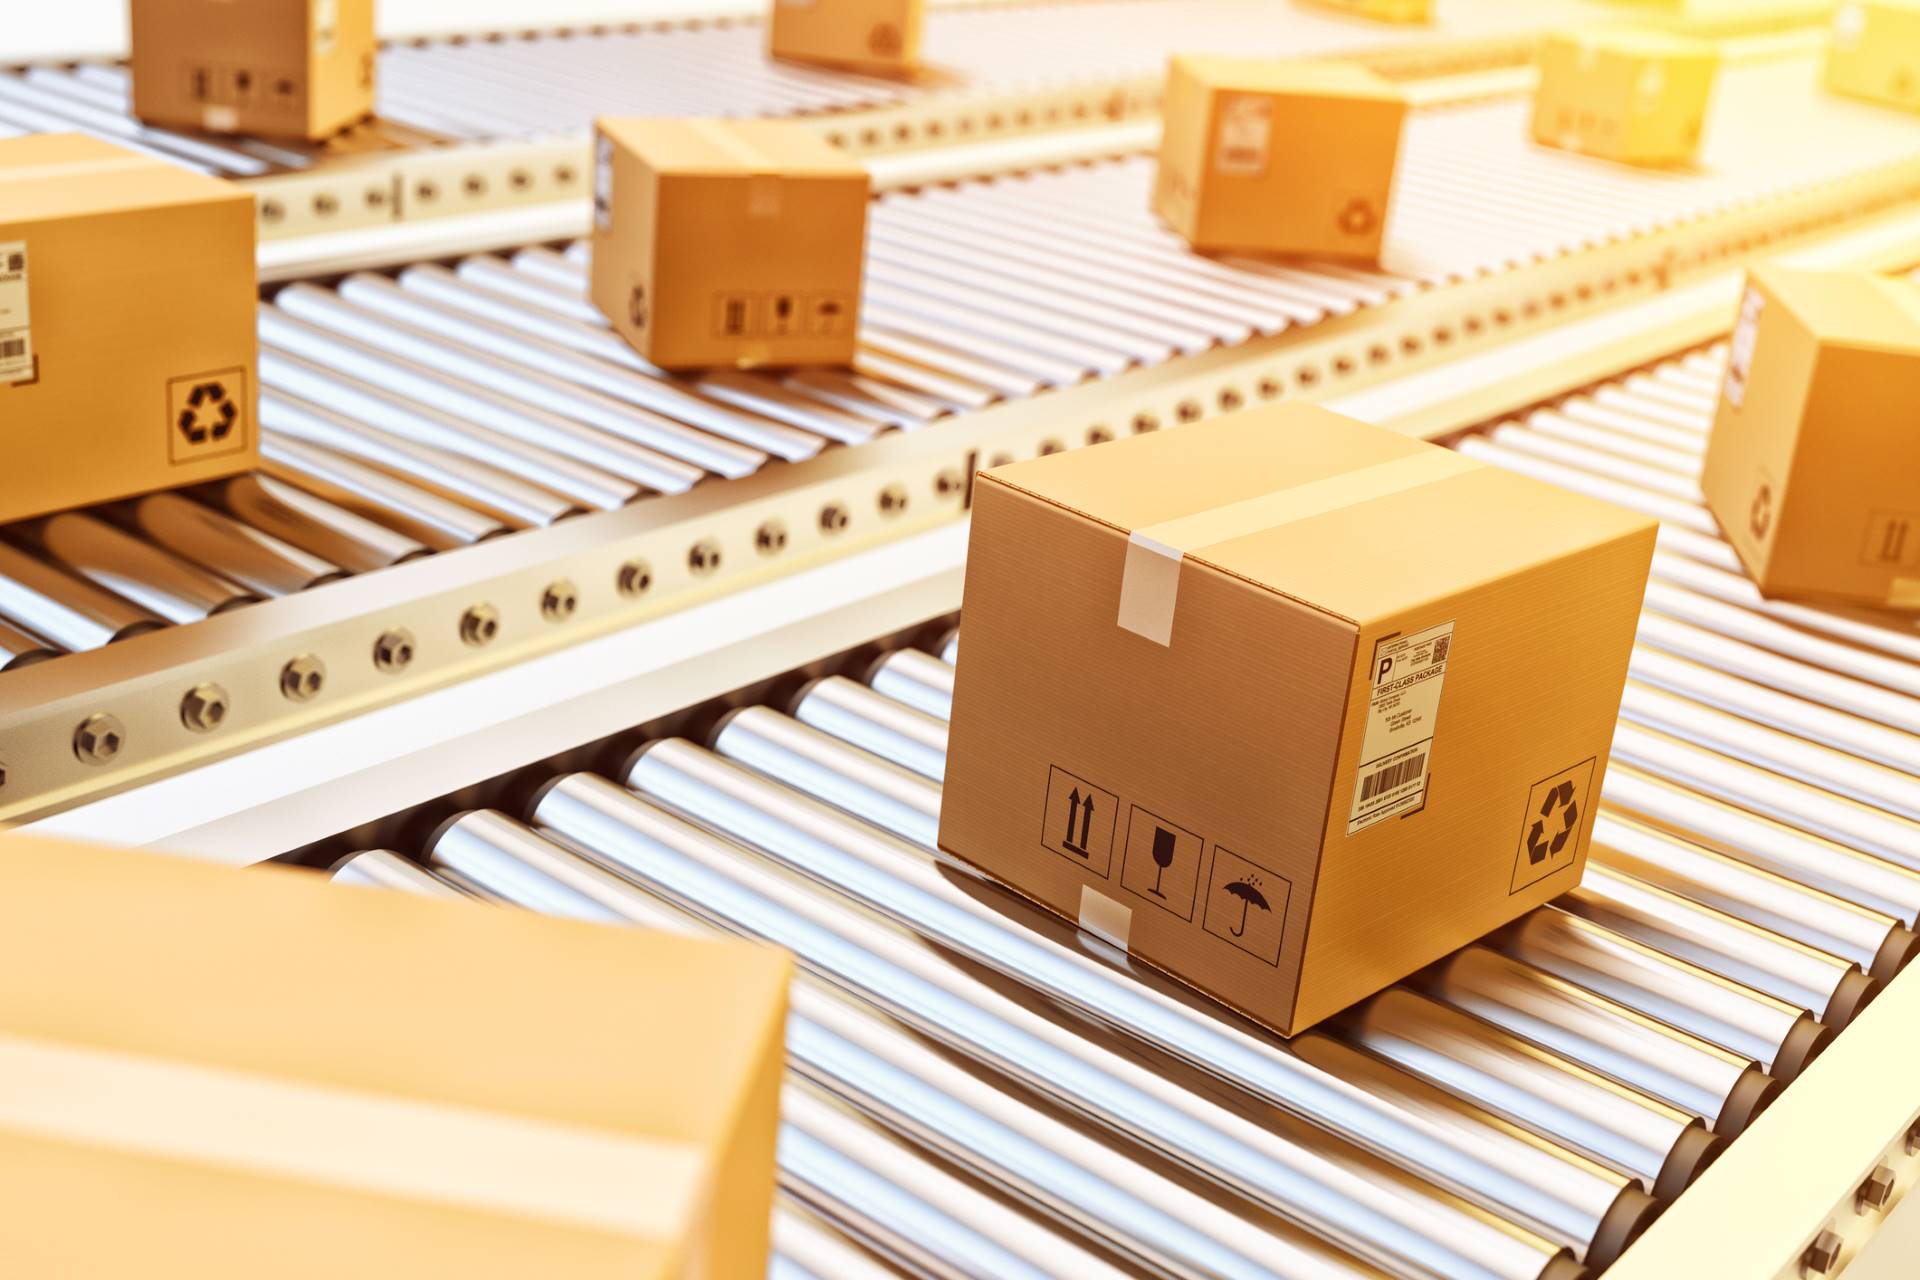 shipping boxes on conveyor belt